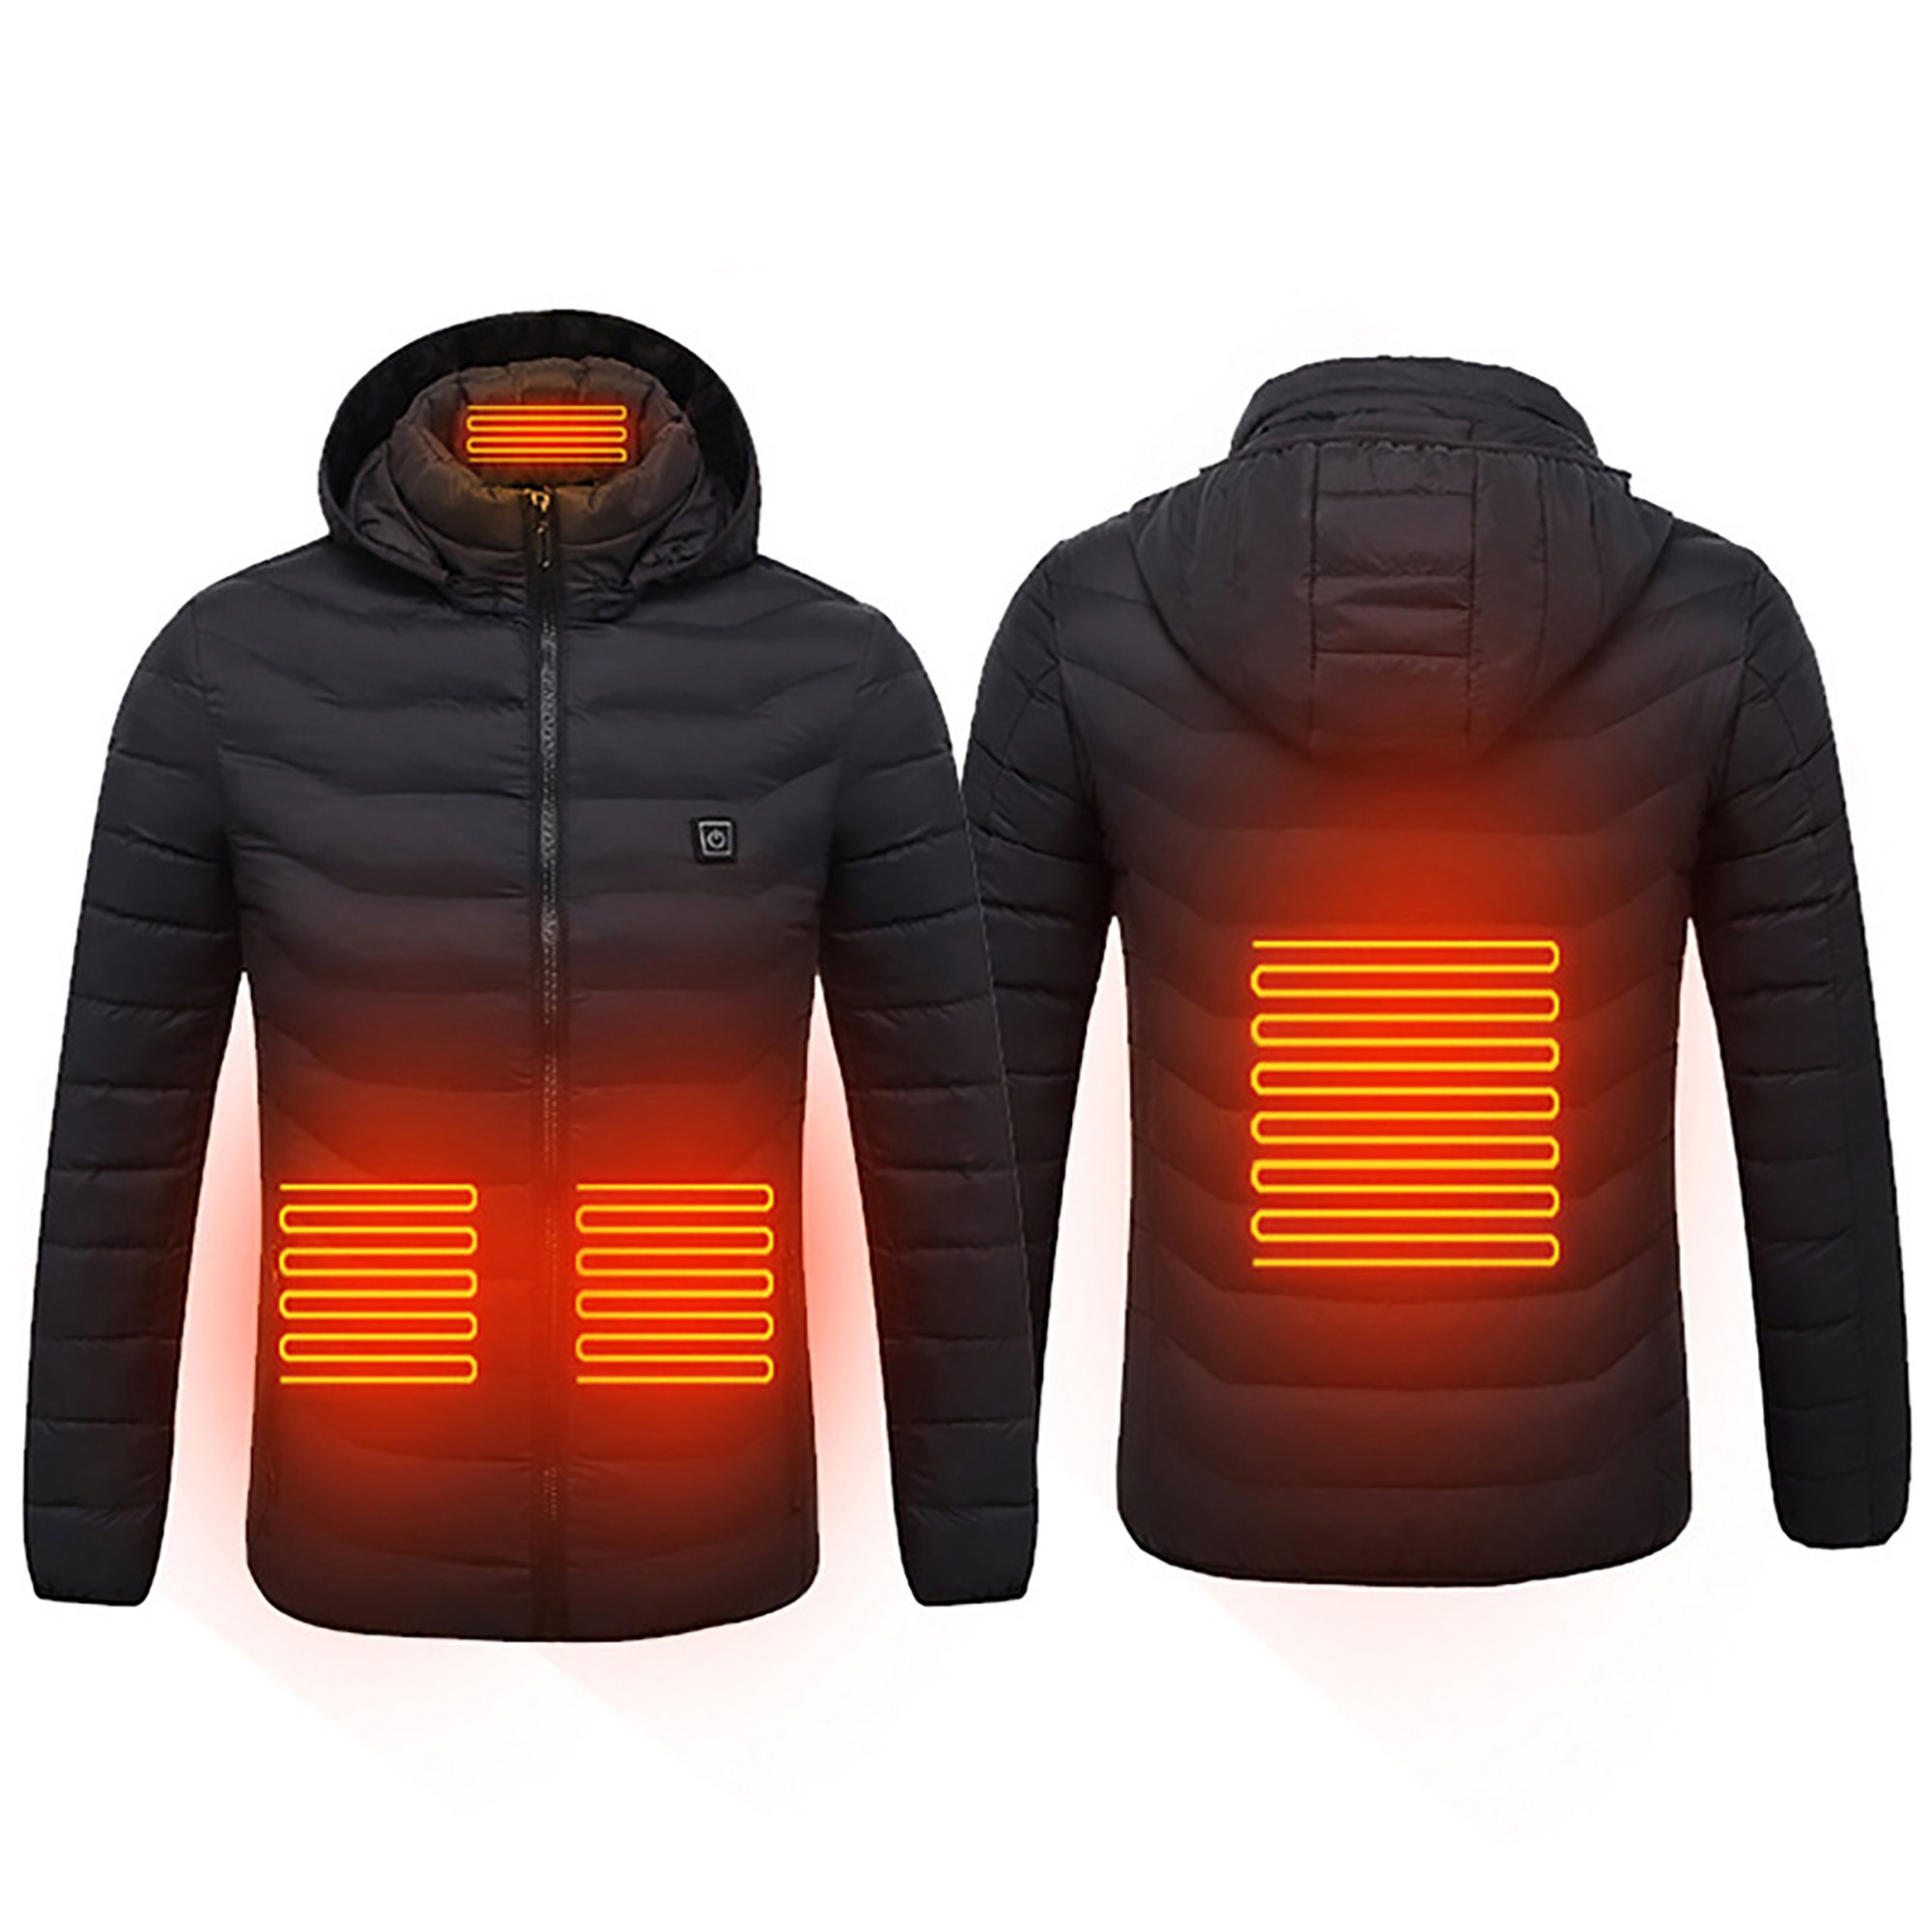 CVLIFE Men's Heated Jacket Full Zip with Detachable Hood (Power Bank is Not Included) Winter Body Warmer Unisex Women Lightweight Heating Coat Clothing - image 1 of 4